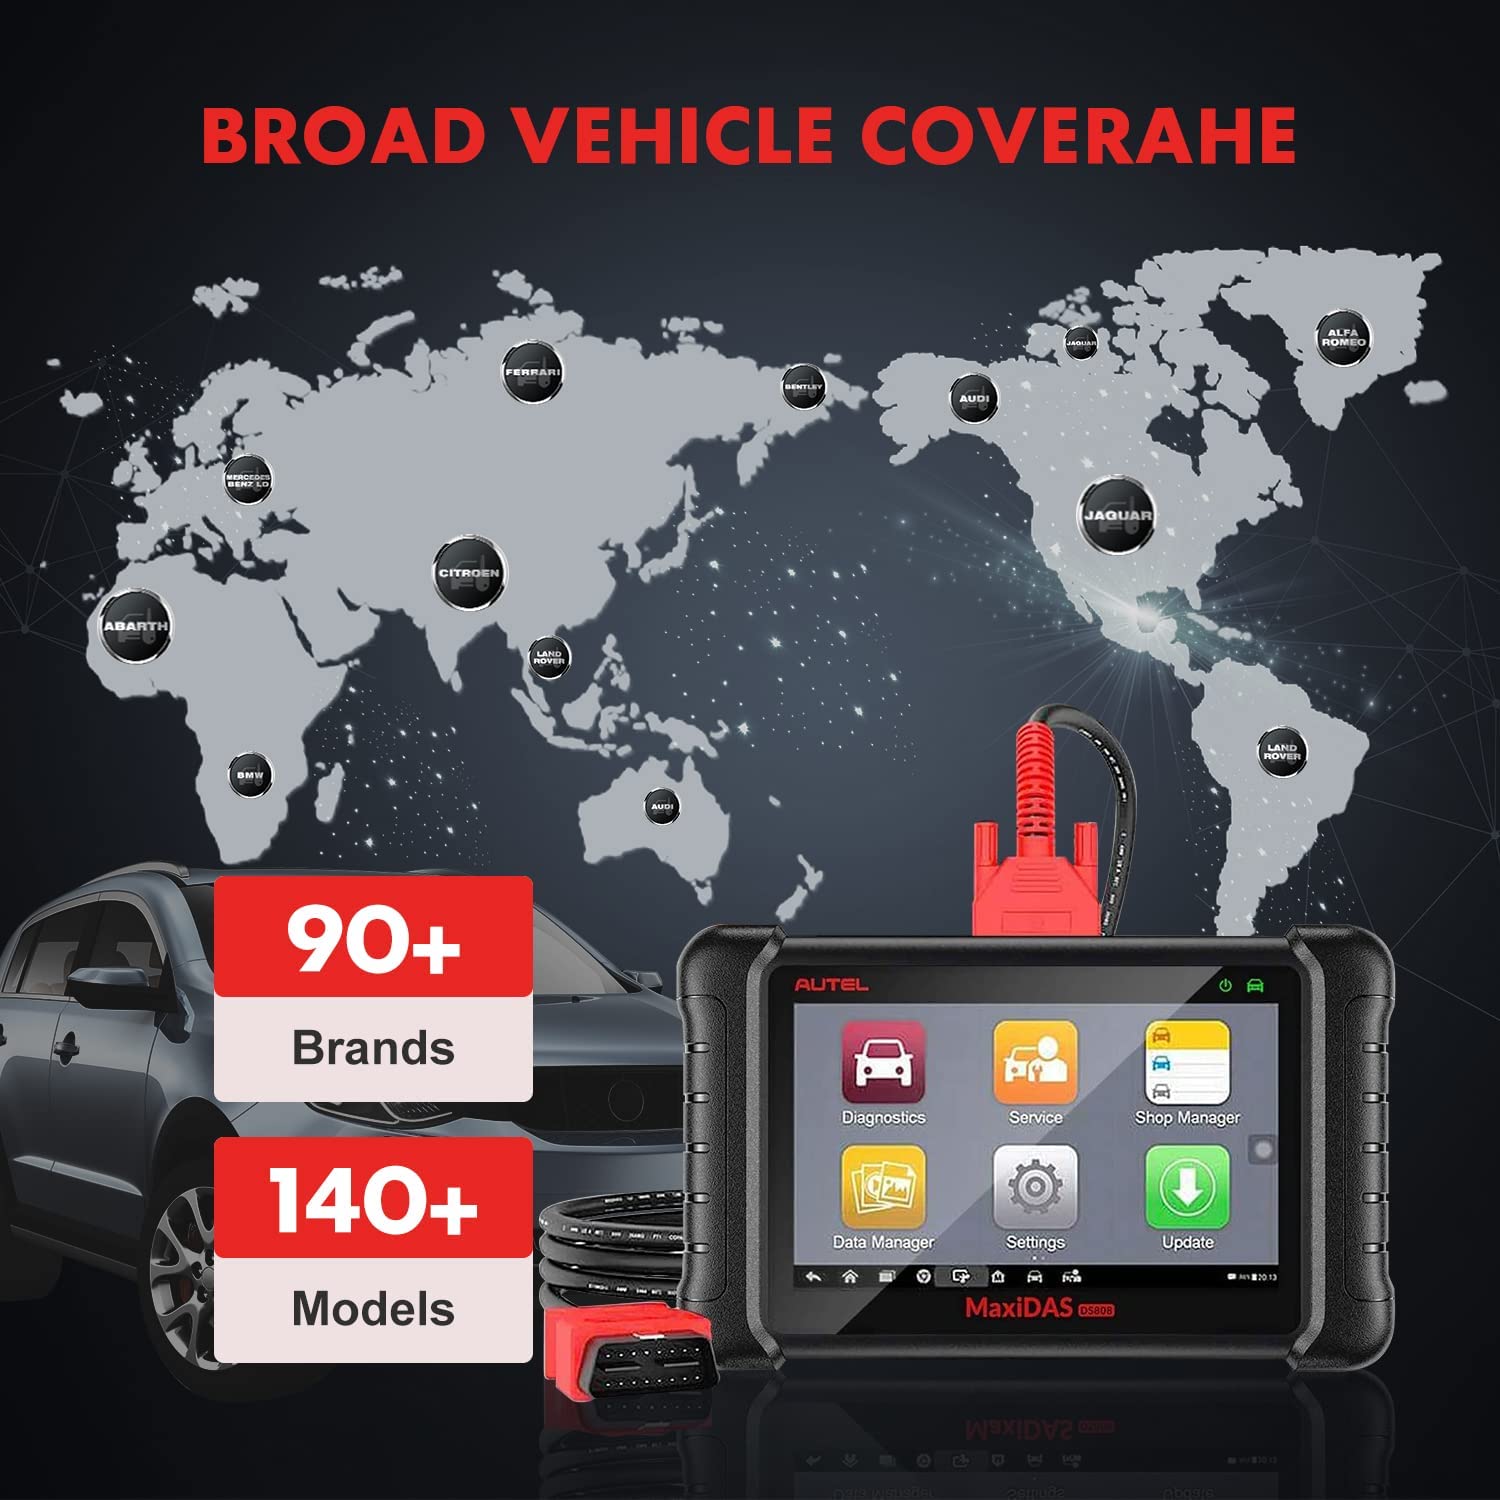 Autel MaxiDAS DS808K vehicles coverage more than 90+ brand